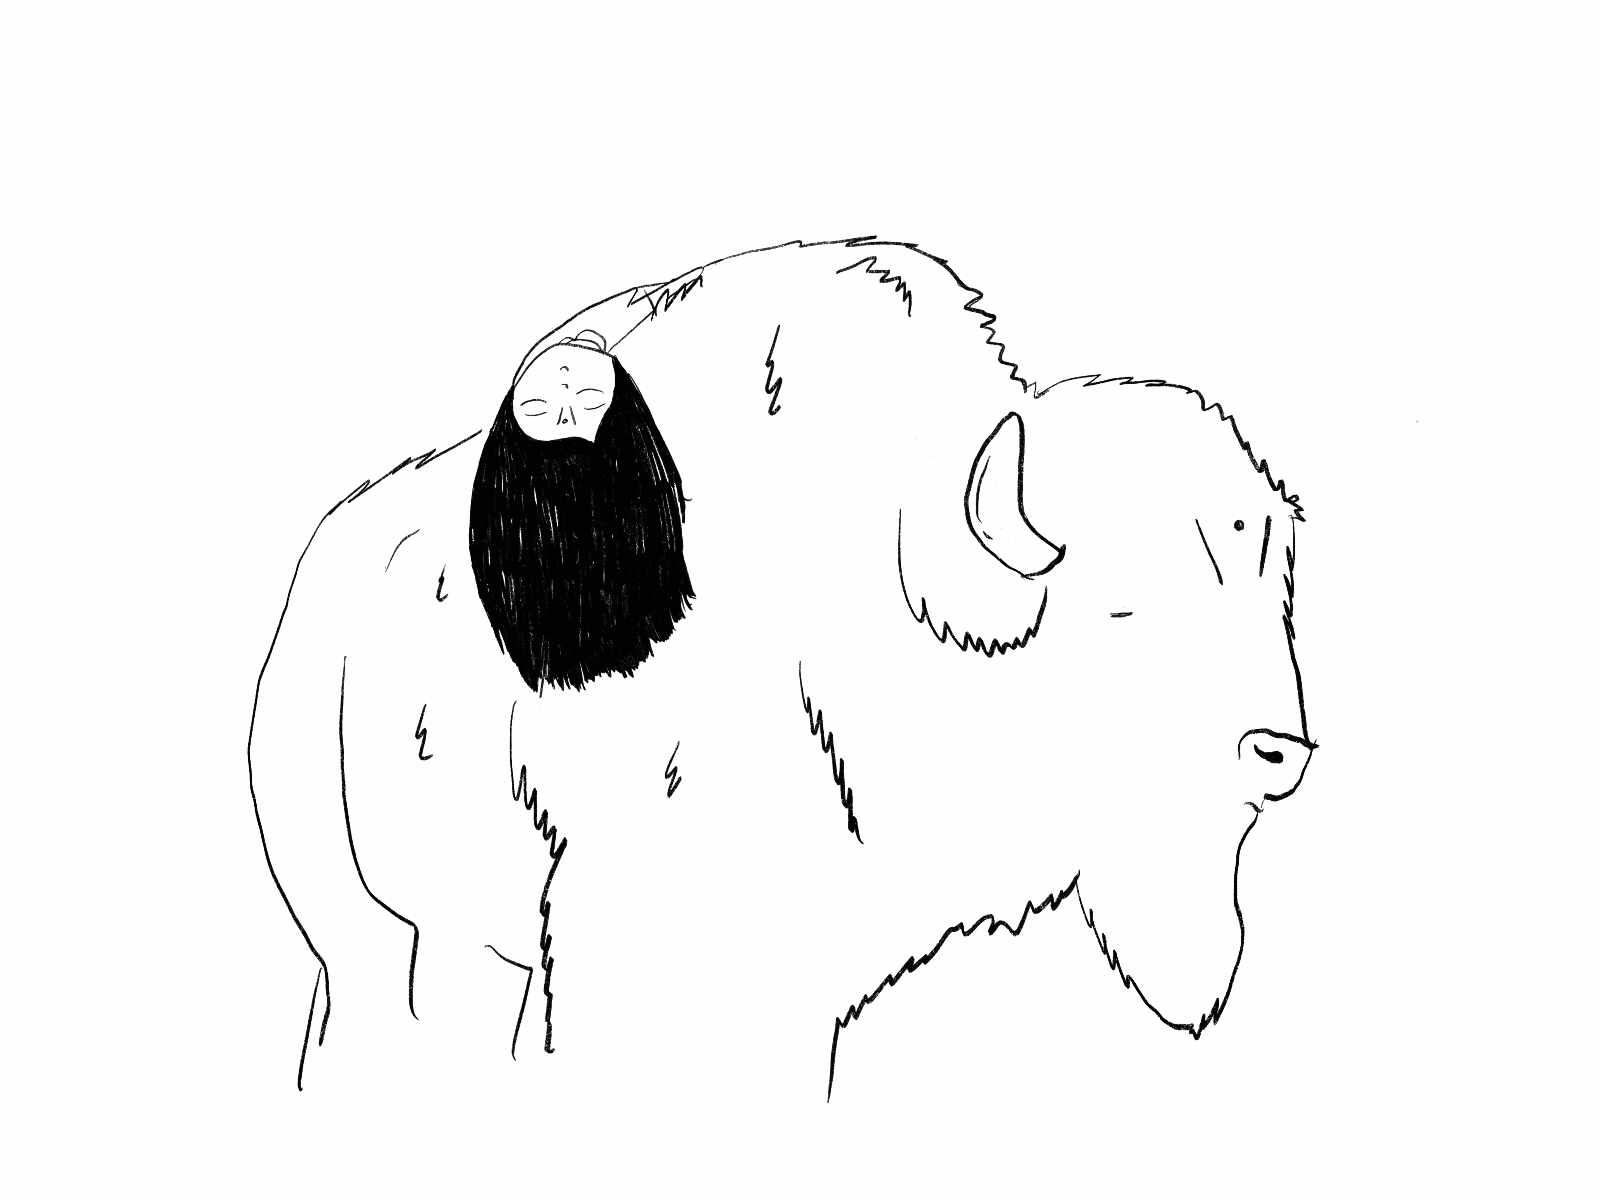 My spirit animal - The bison